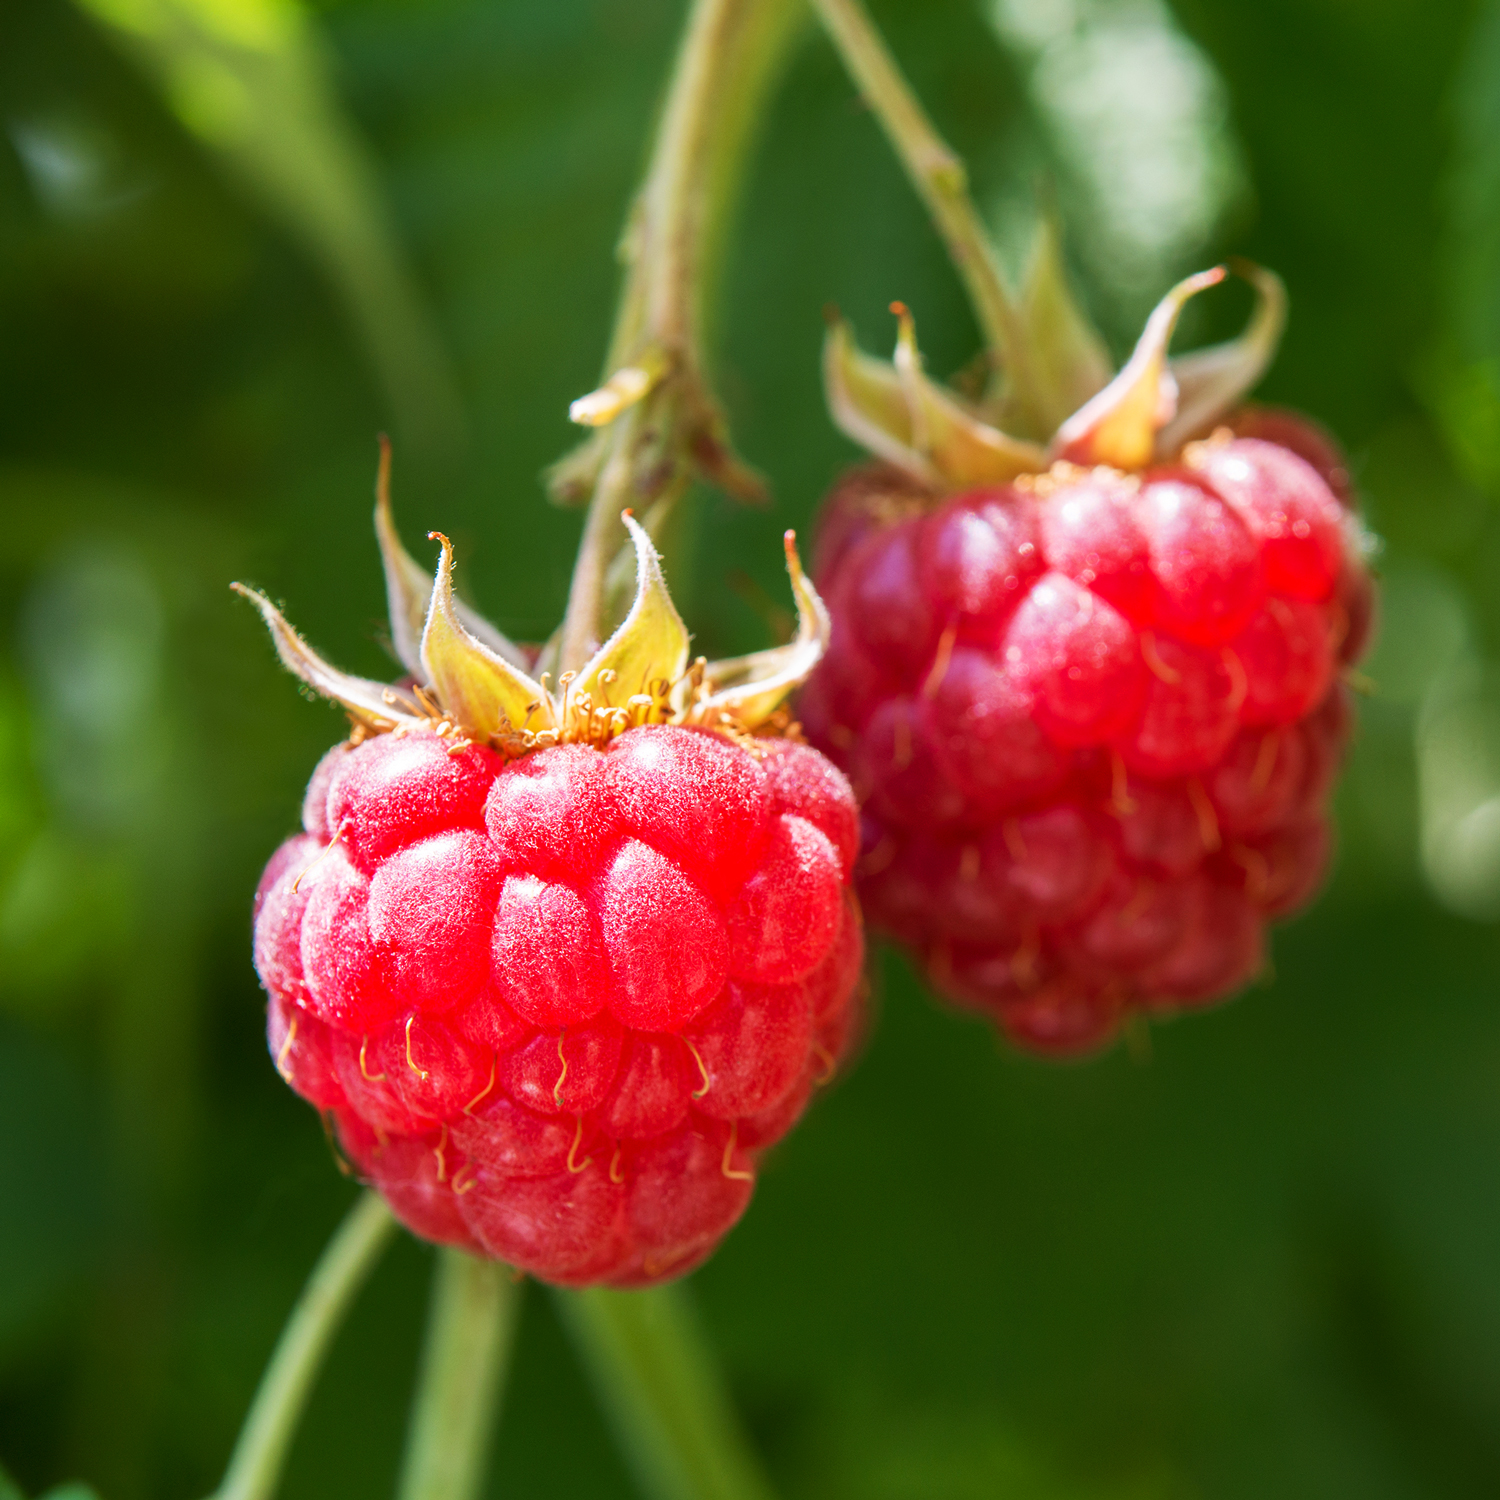 Image of 2 raspberries on a bush